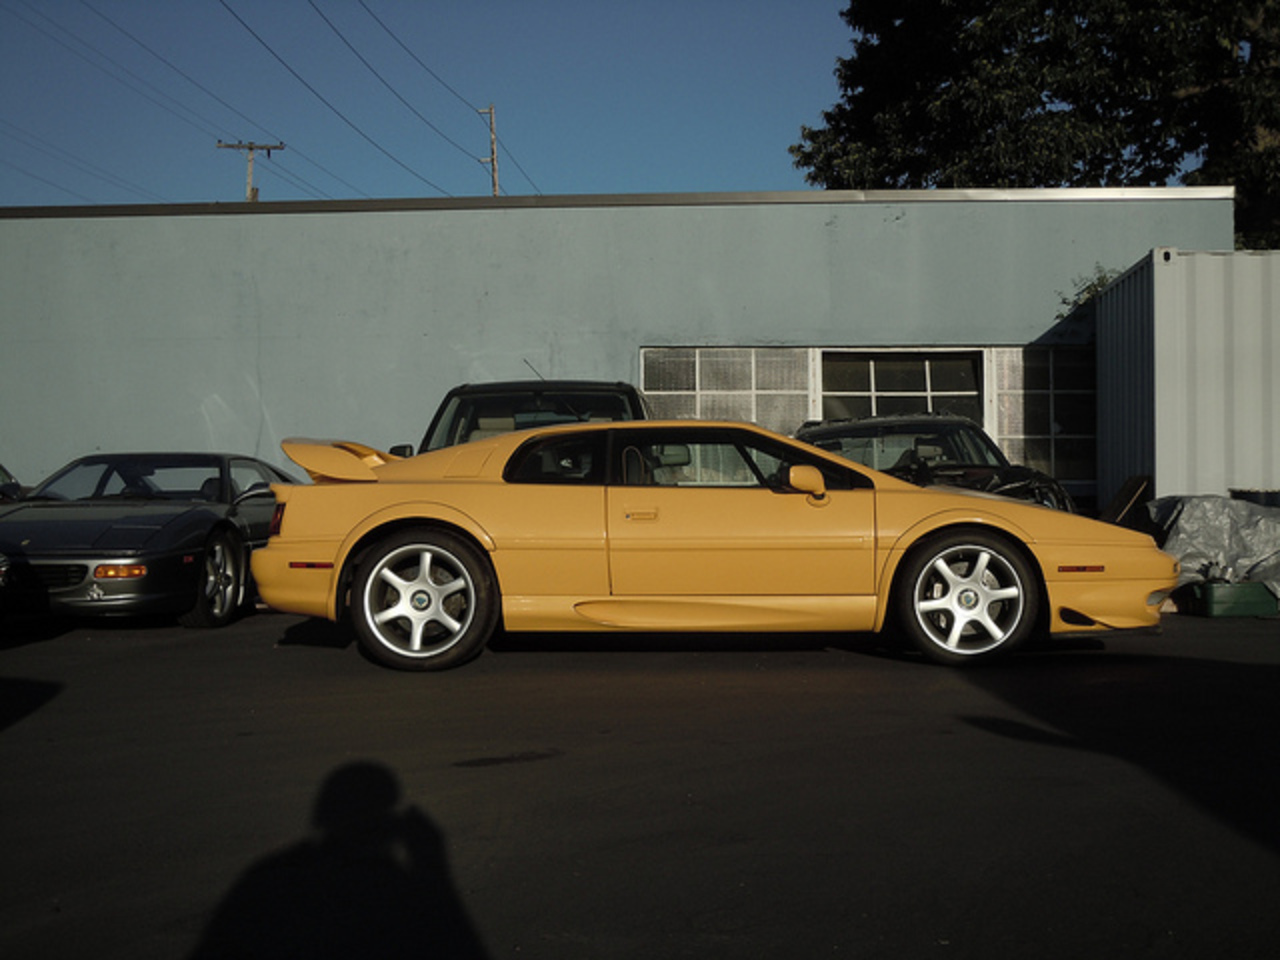 2000 Lotus Esprit V8 Twin Turbo, Ferrari F355 GTS | Flickr - Photo ...